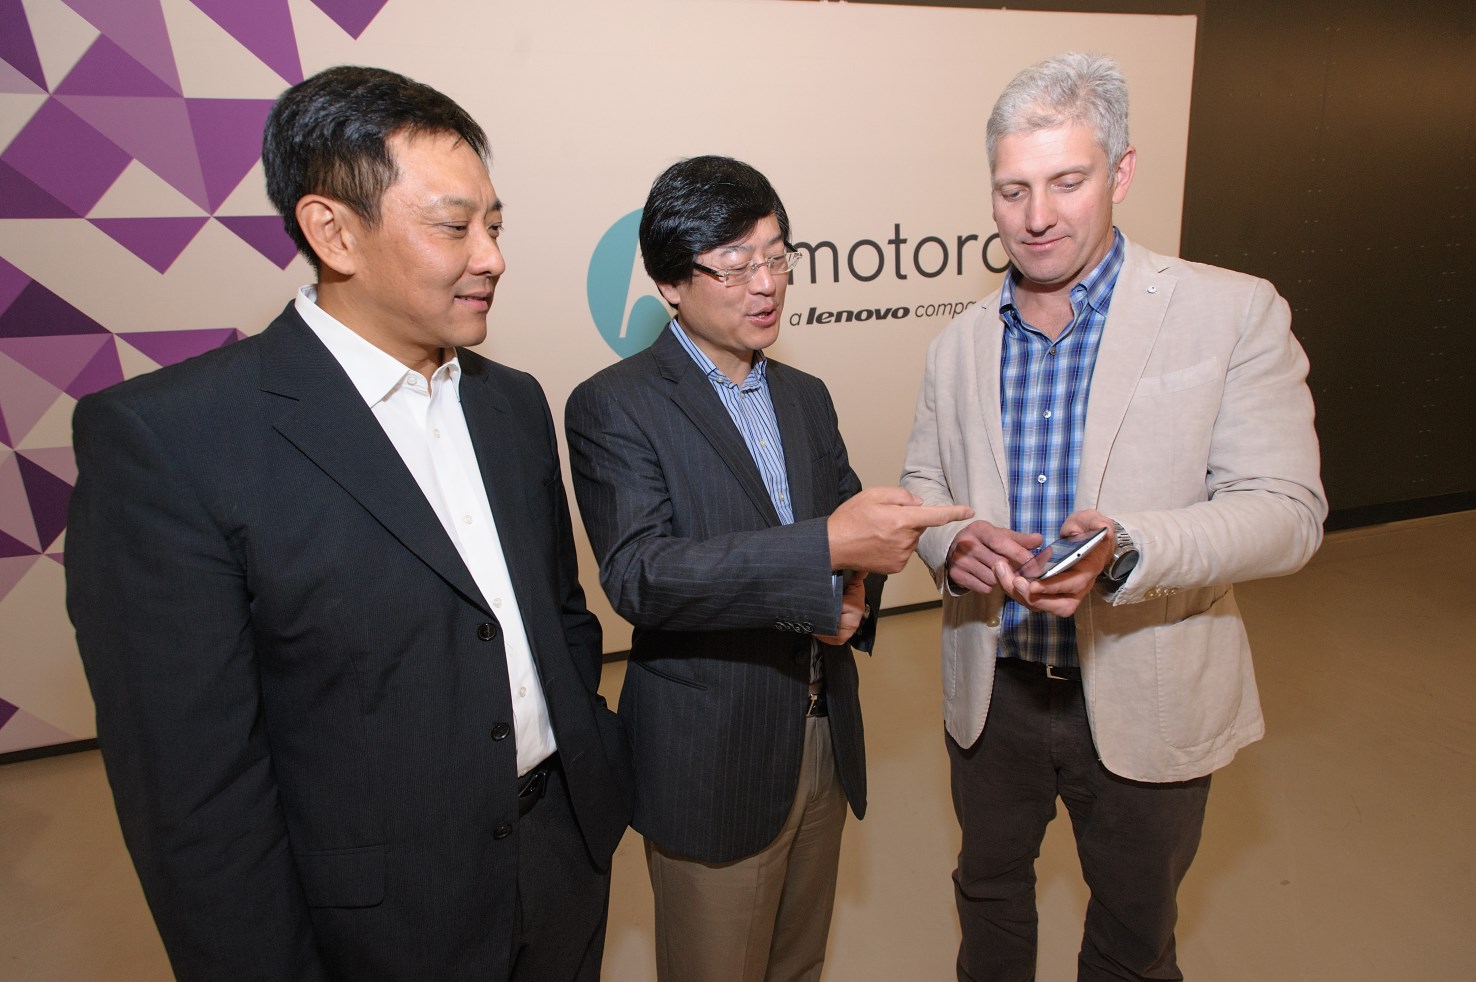 Motorola Mobility ist jetzt ein Lenovo-Unternehmen